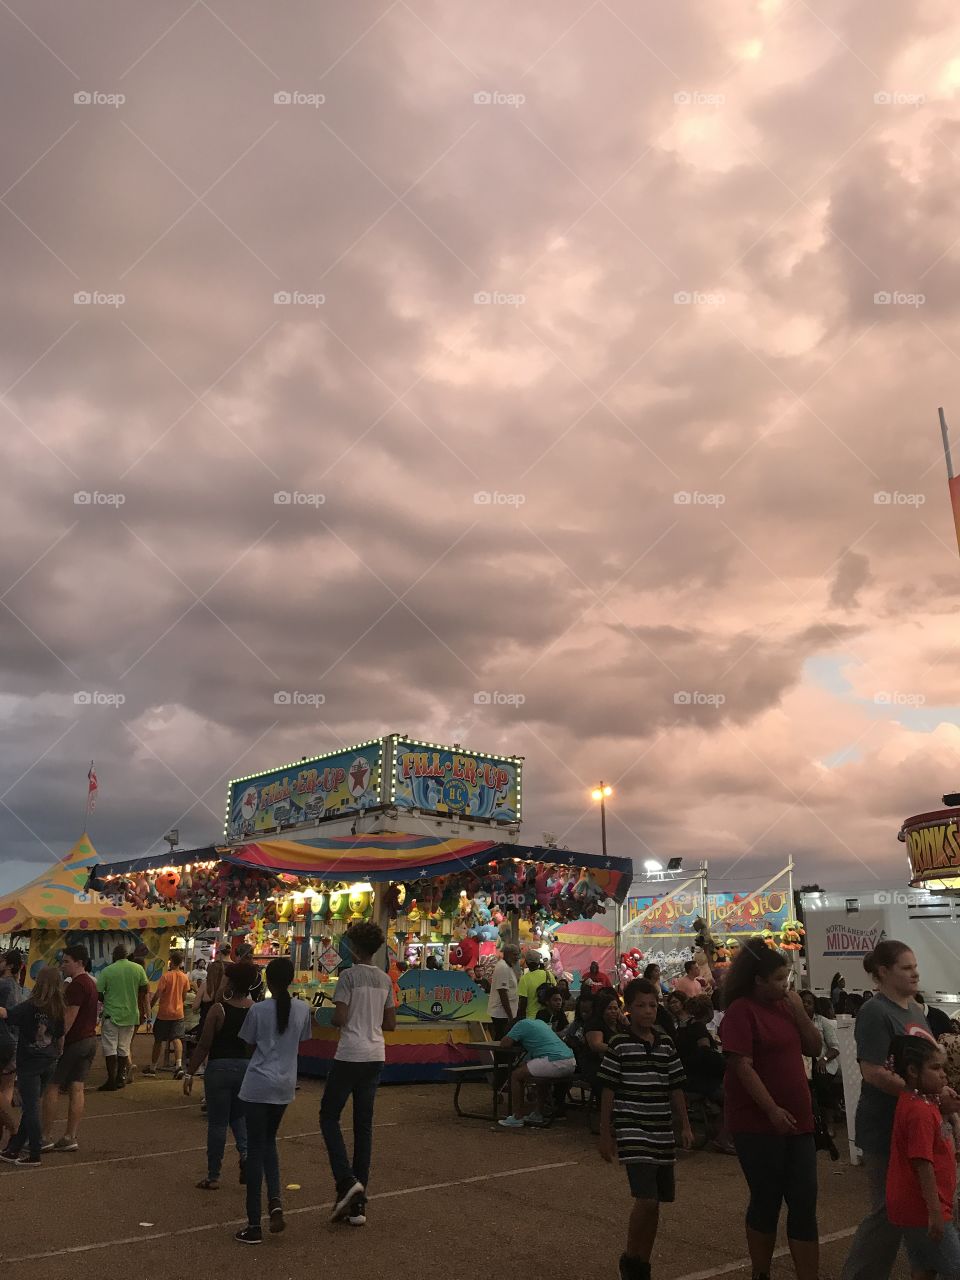 Clouds at the fair